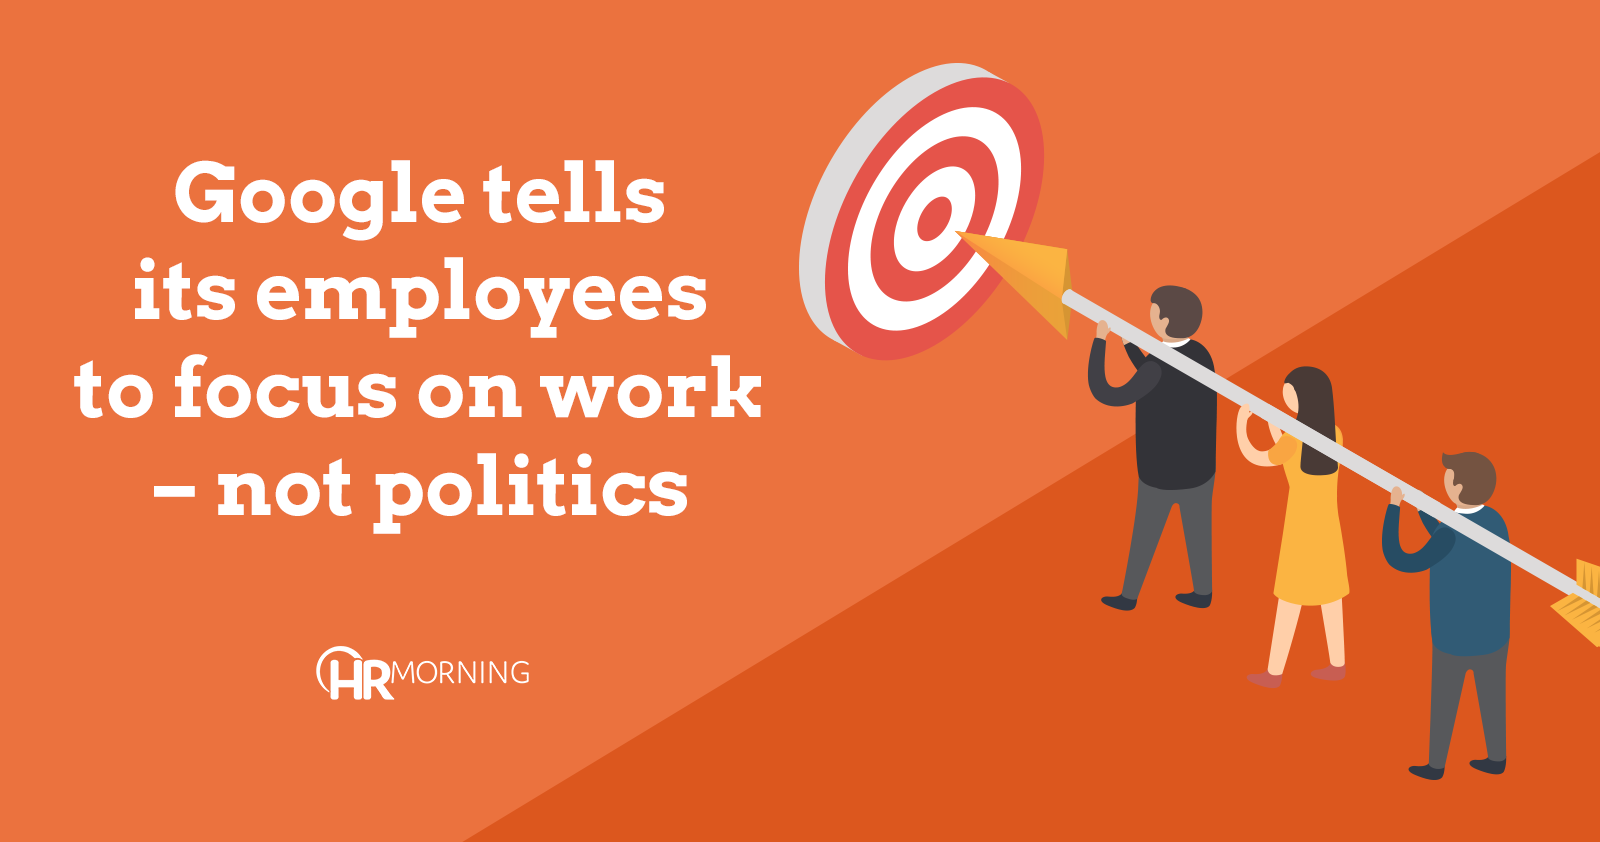 Google tells its employees to focus on work - not politics